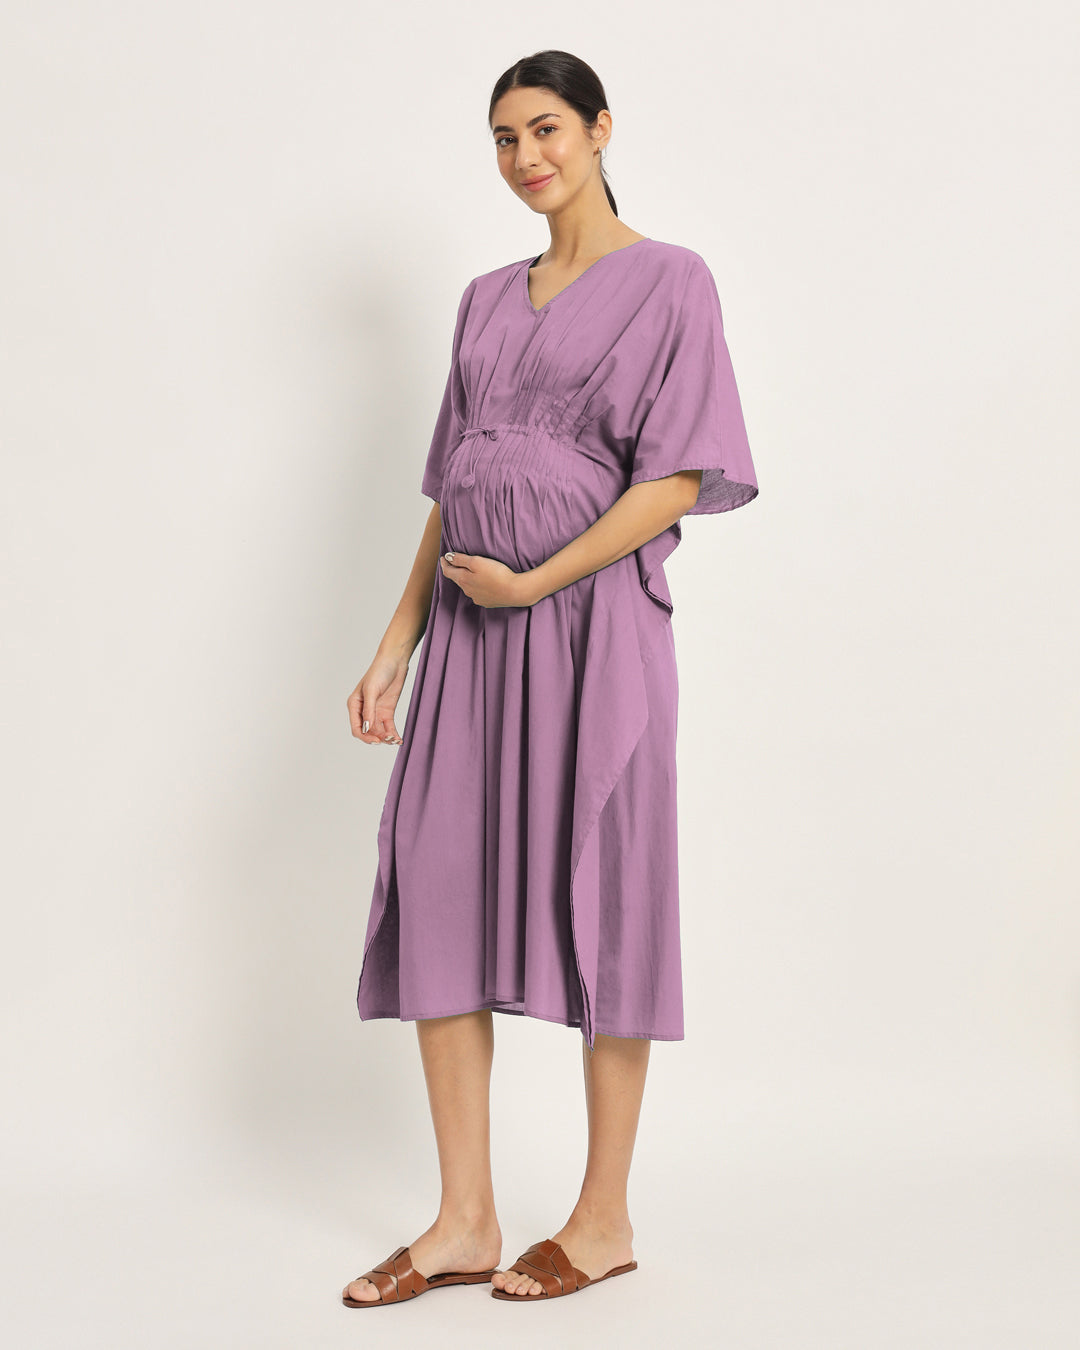 Combo: Iris Pink & Wisteria Purple Mommy Mode Maternity & Nursing Dress